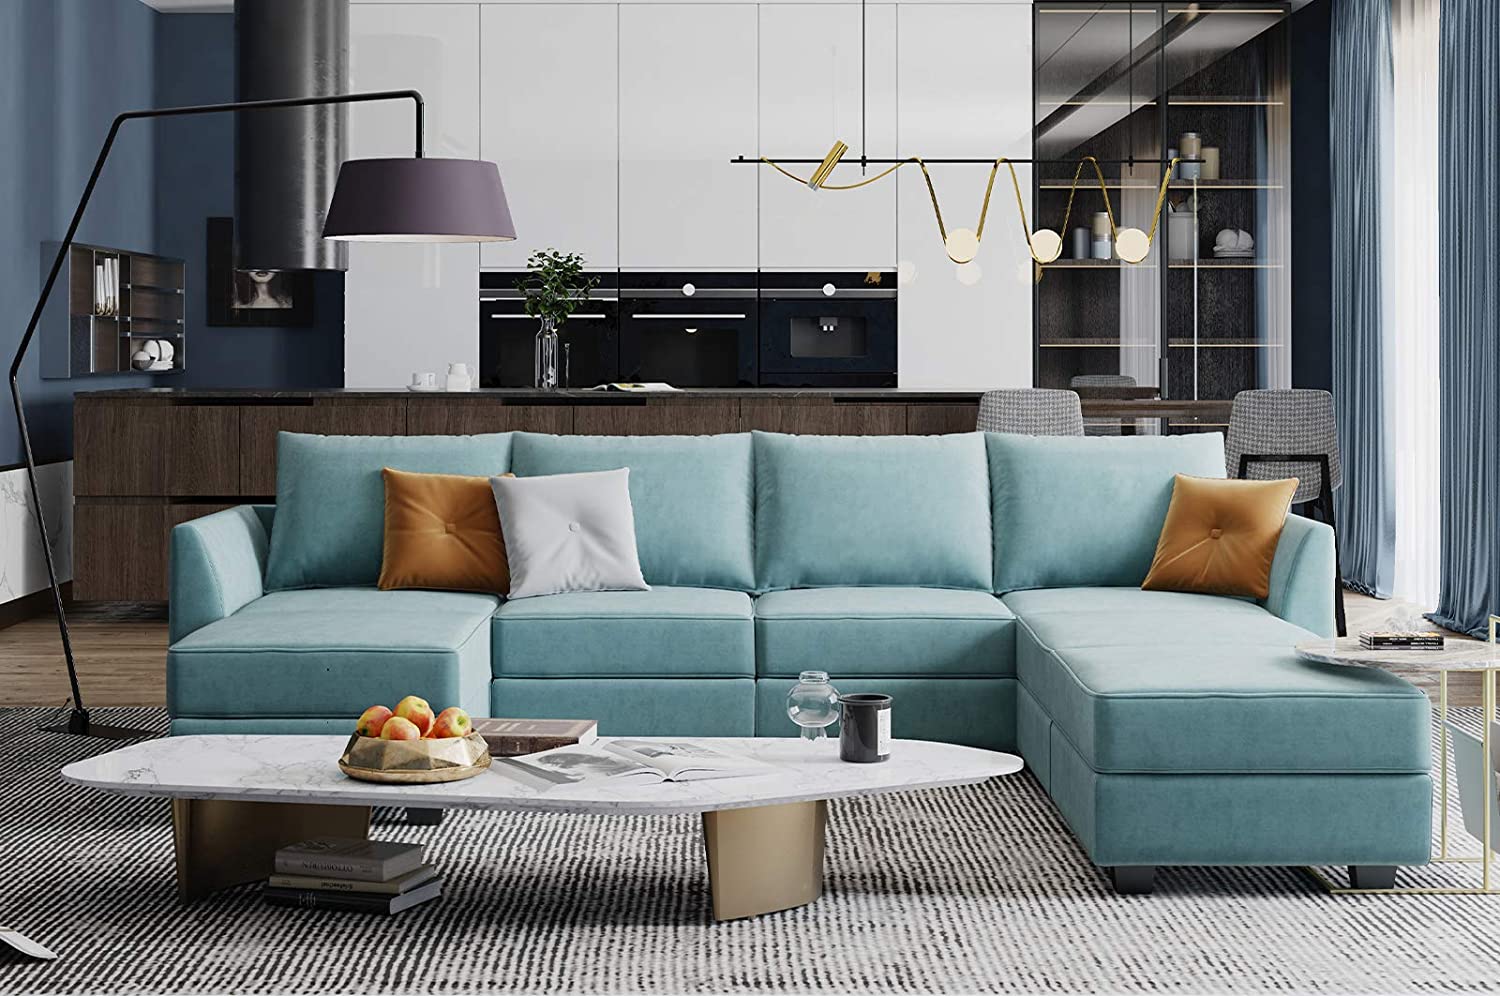 HONBAY Modular Sectional Sofa